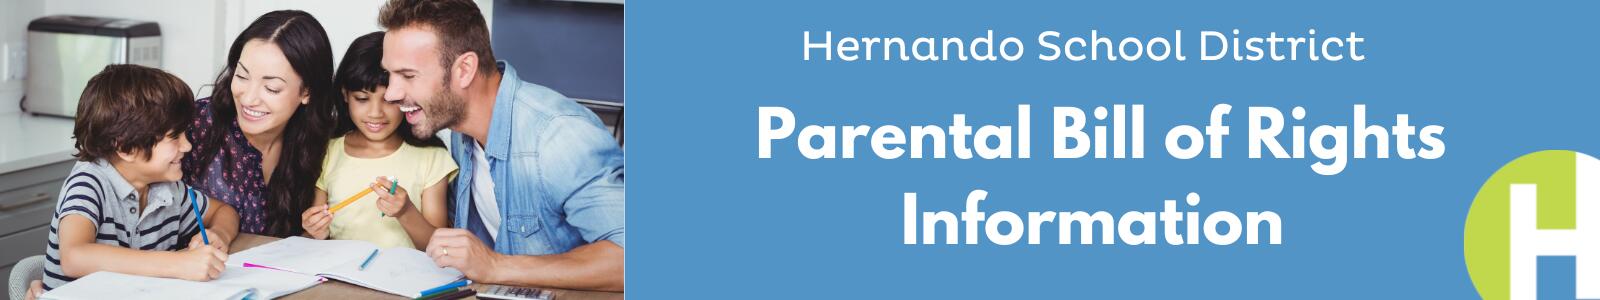 HCSD Parental Bill of Rights